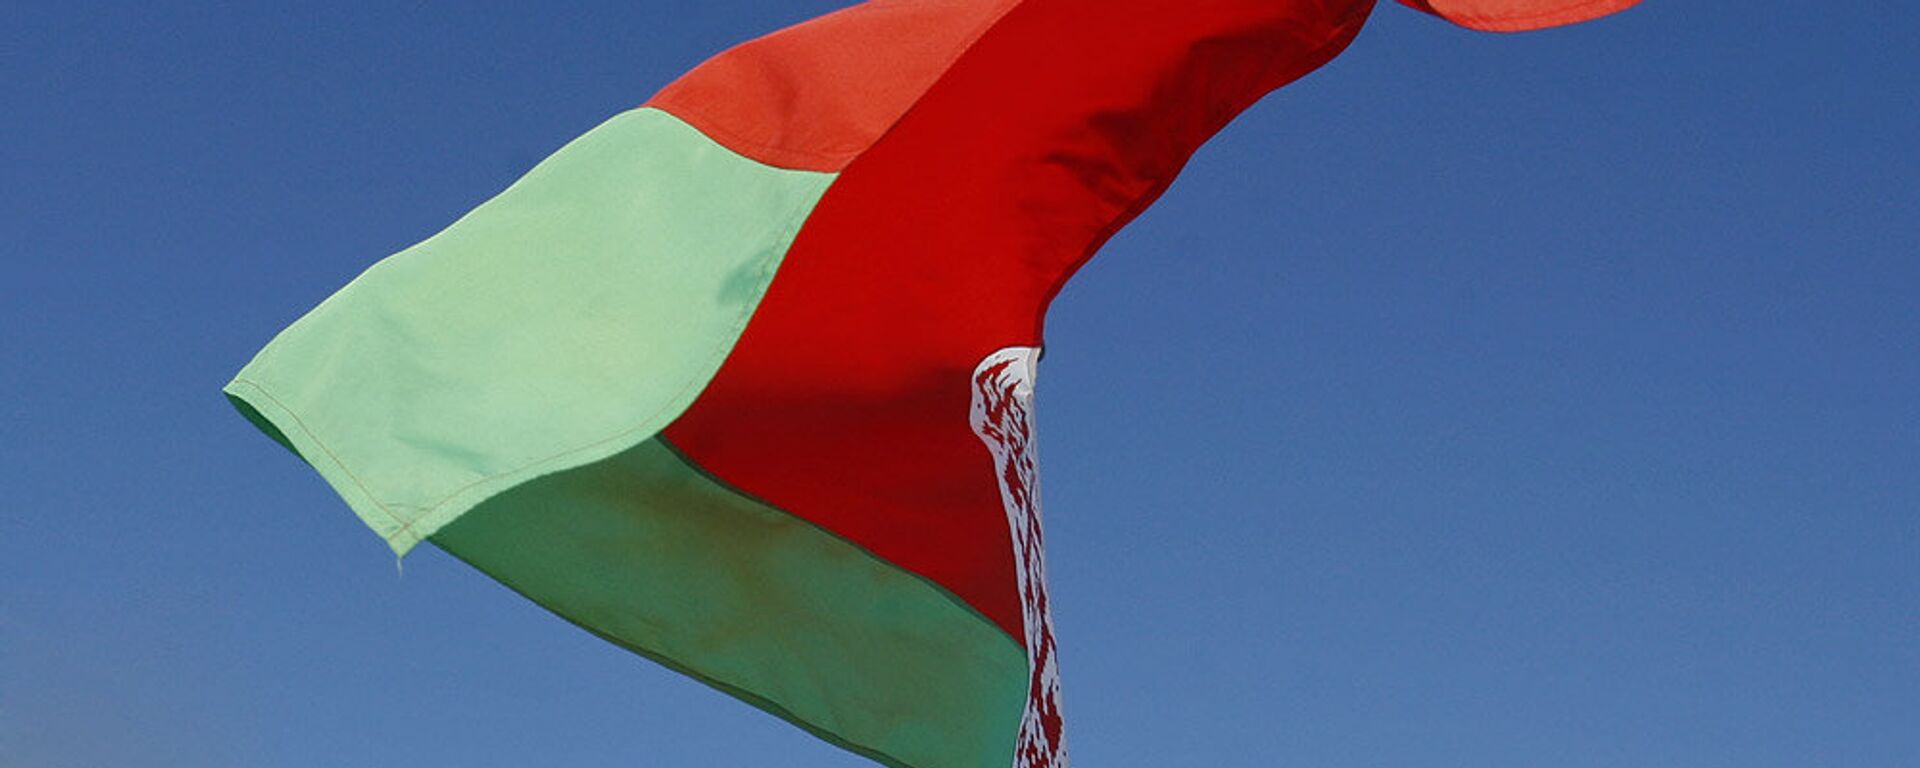 Bandera de Bielorrusia - Sputnik Mundo, 1920, 24.05.2021